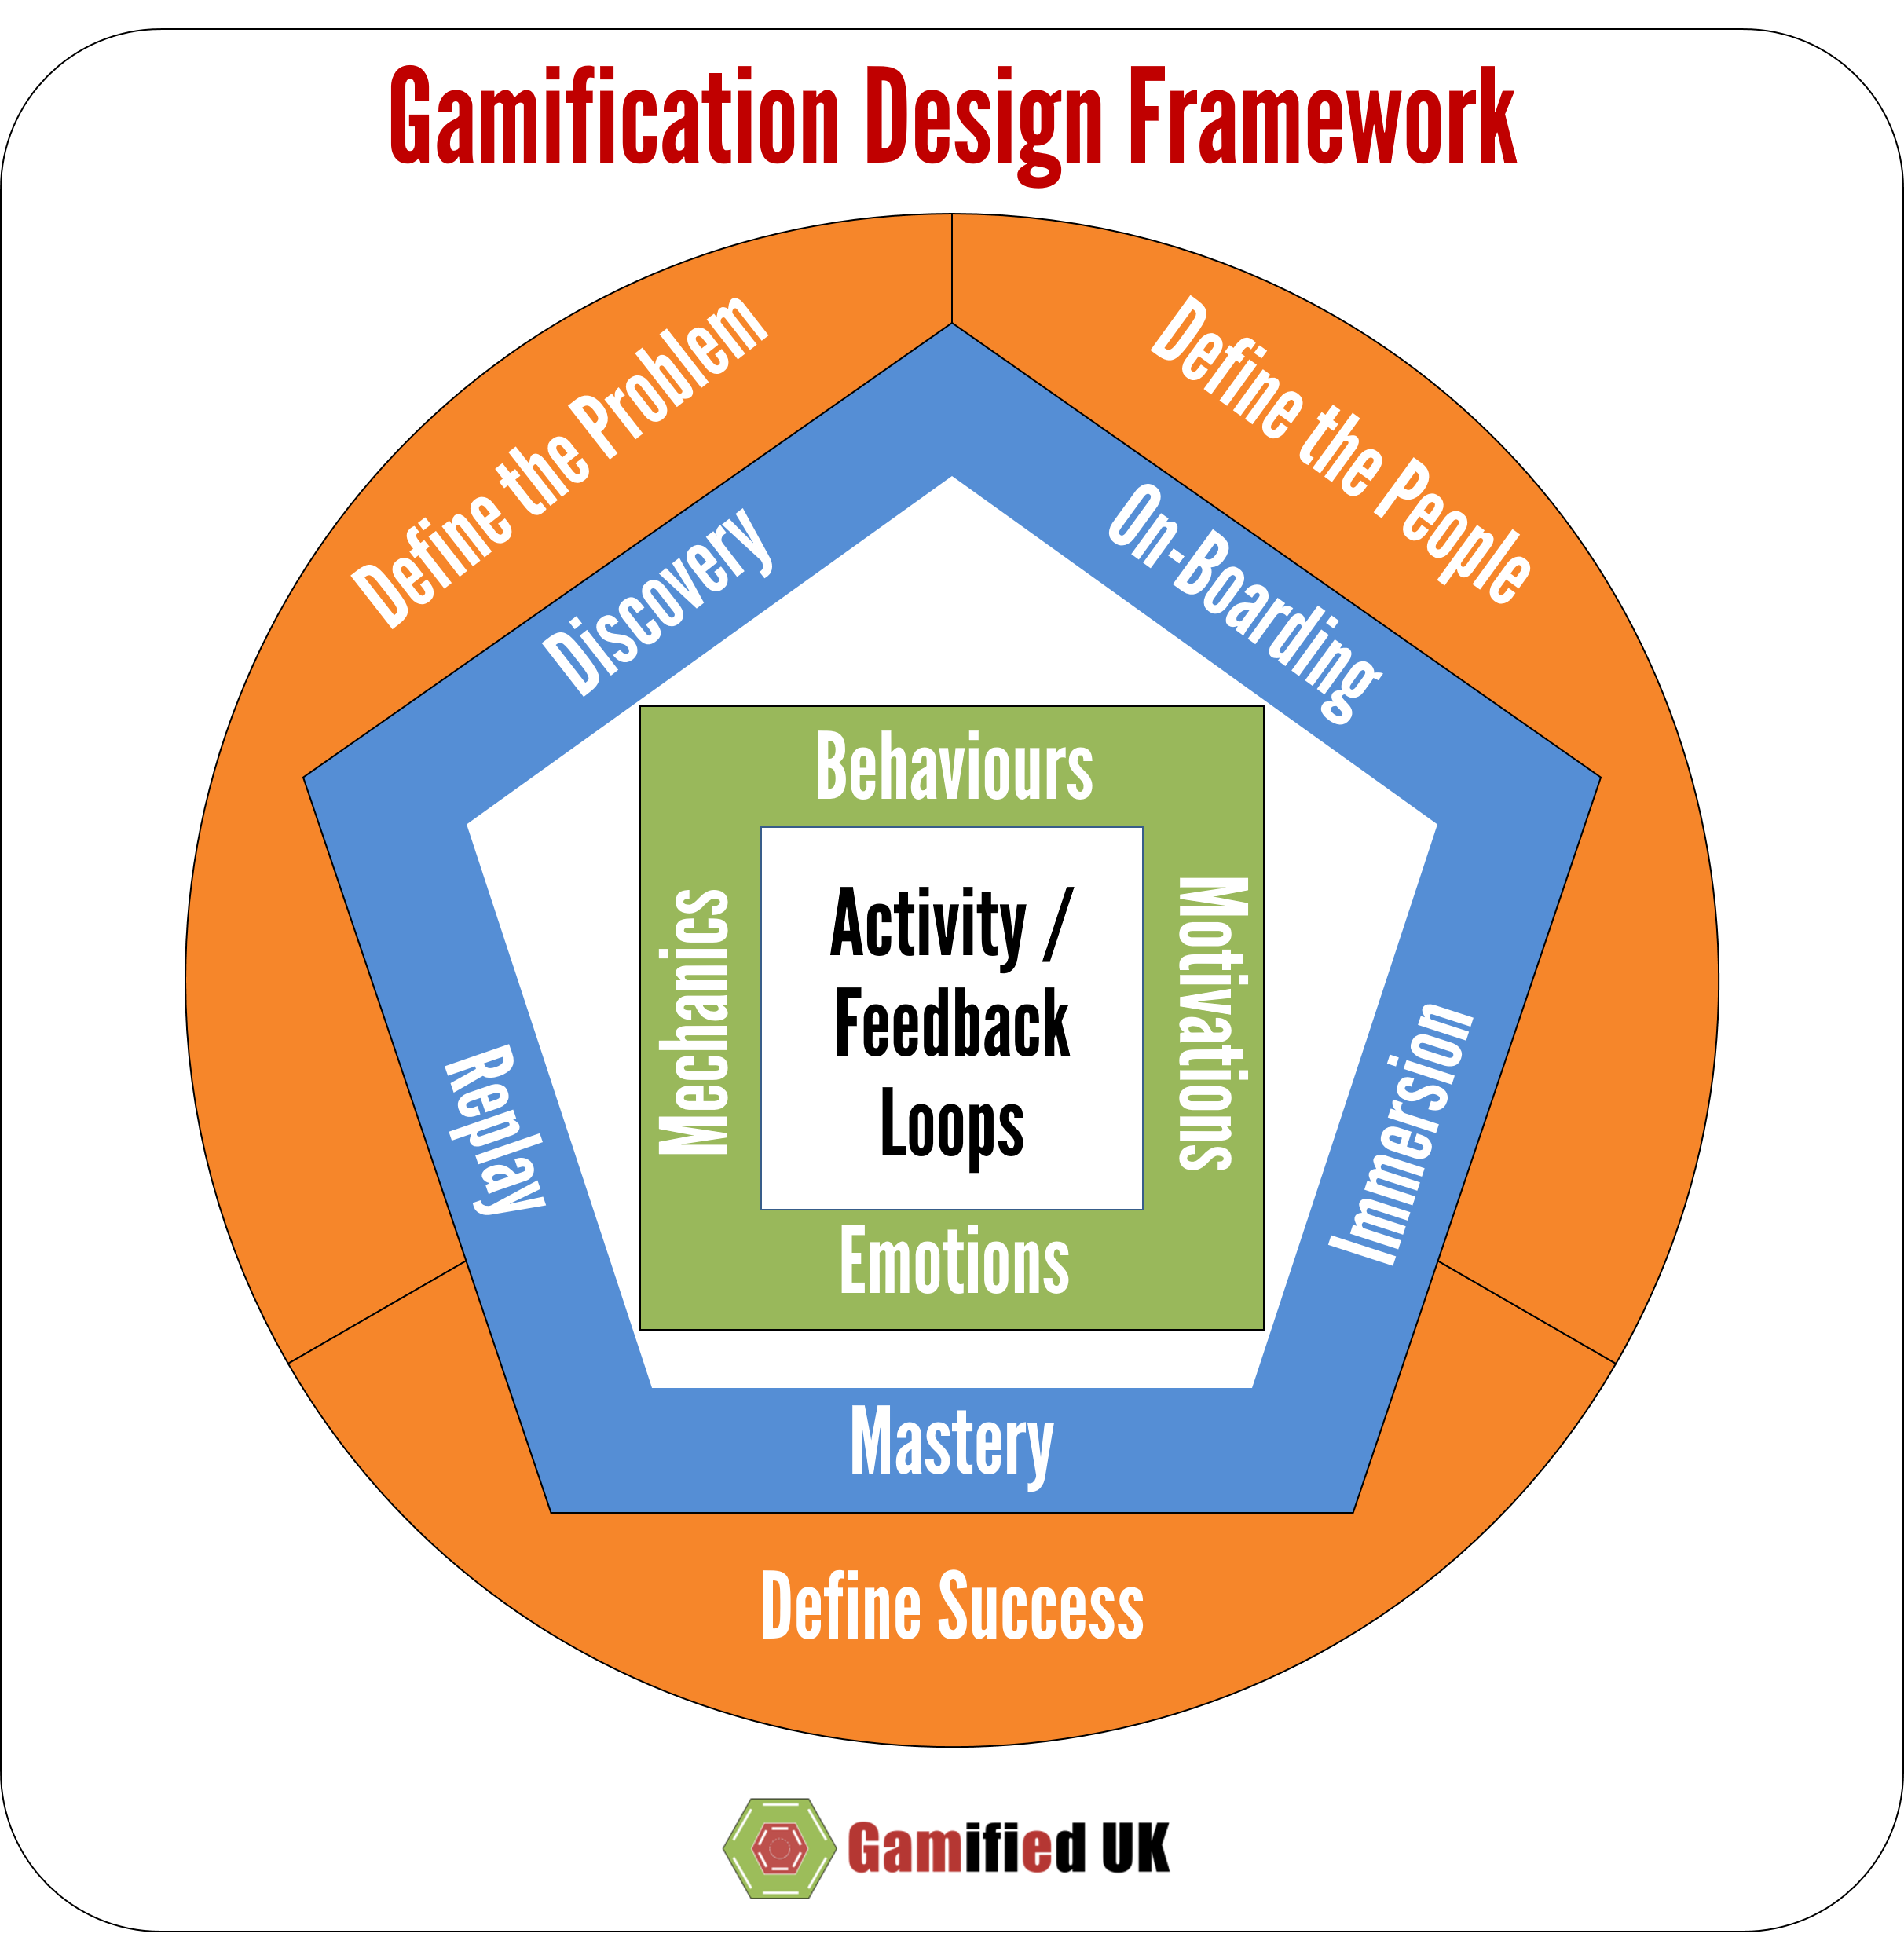 Gamification Design Framework Overview